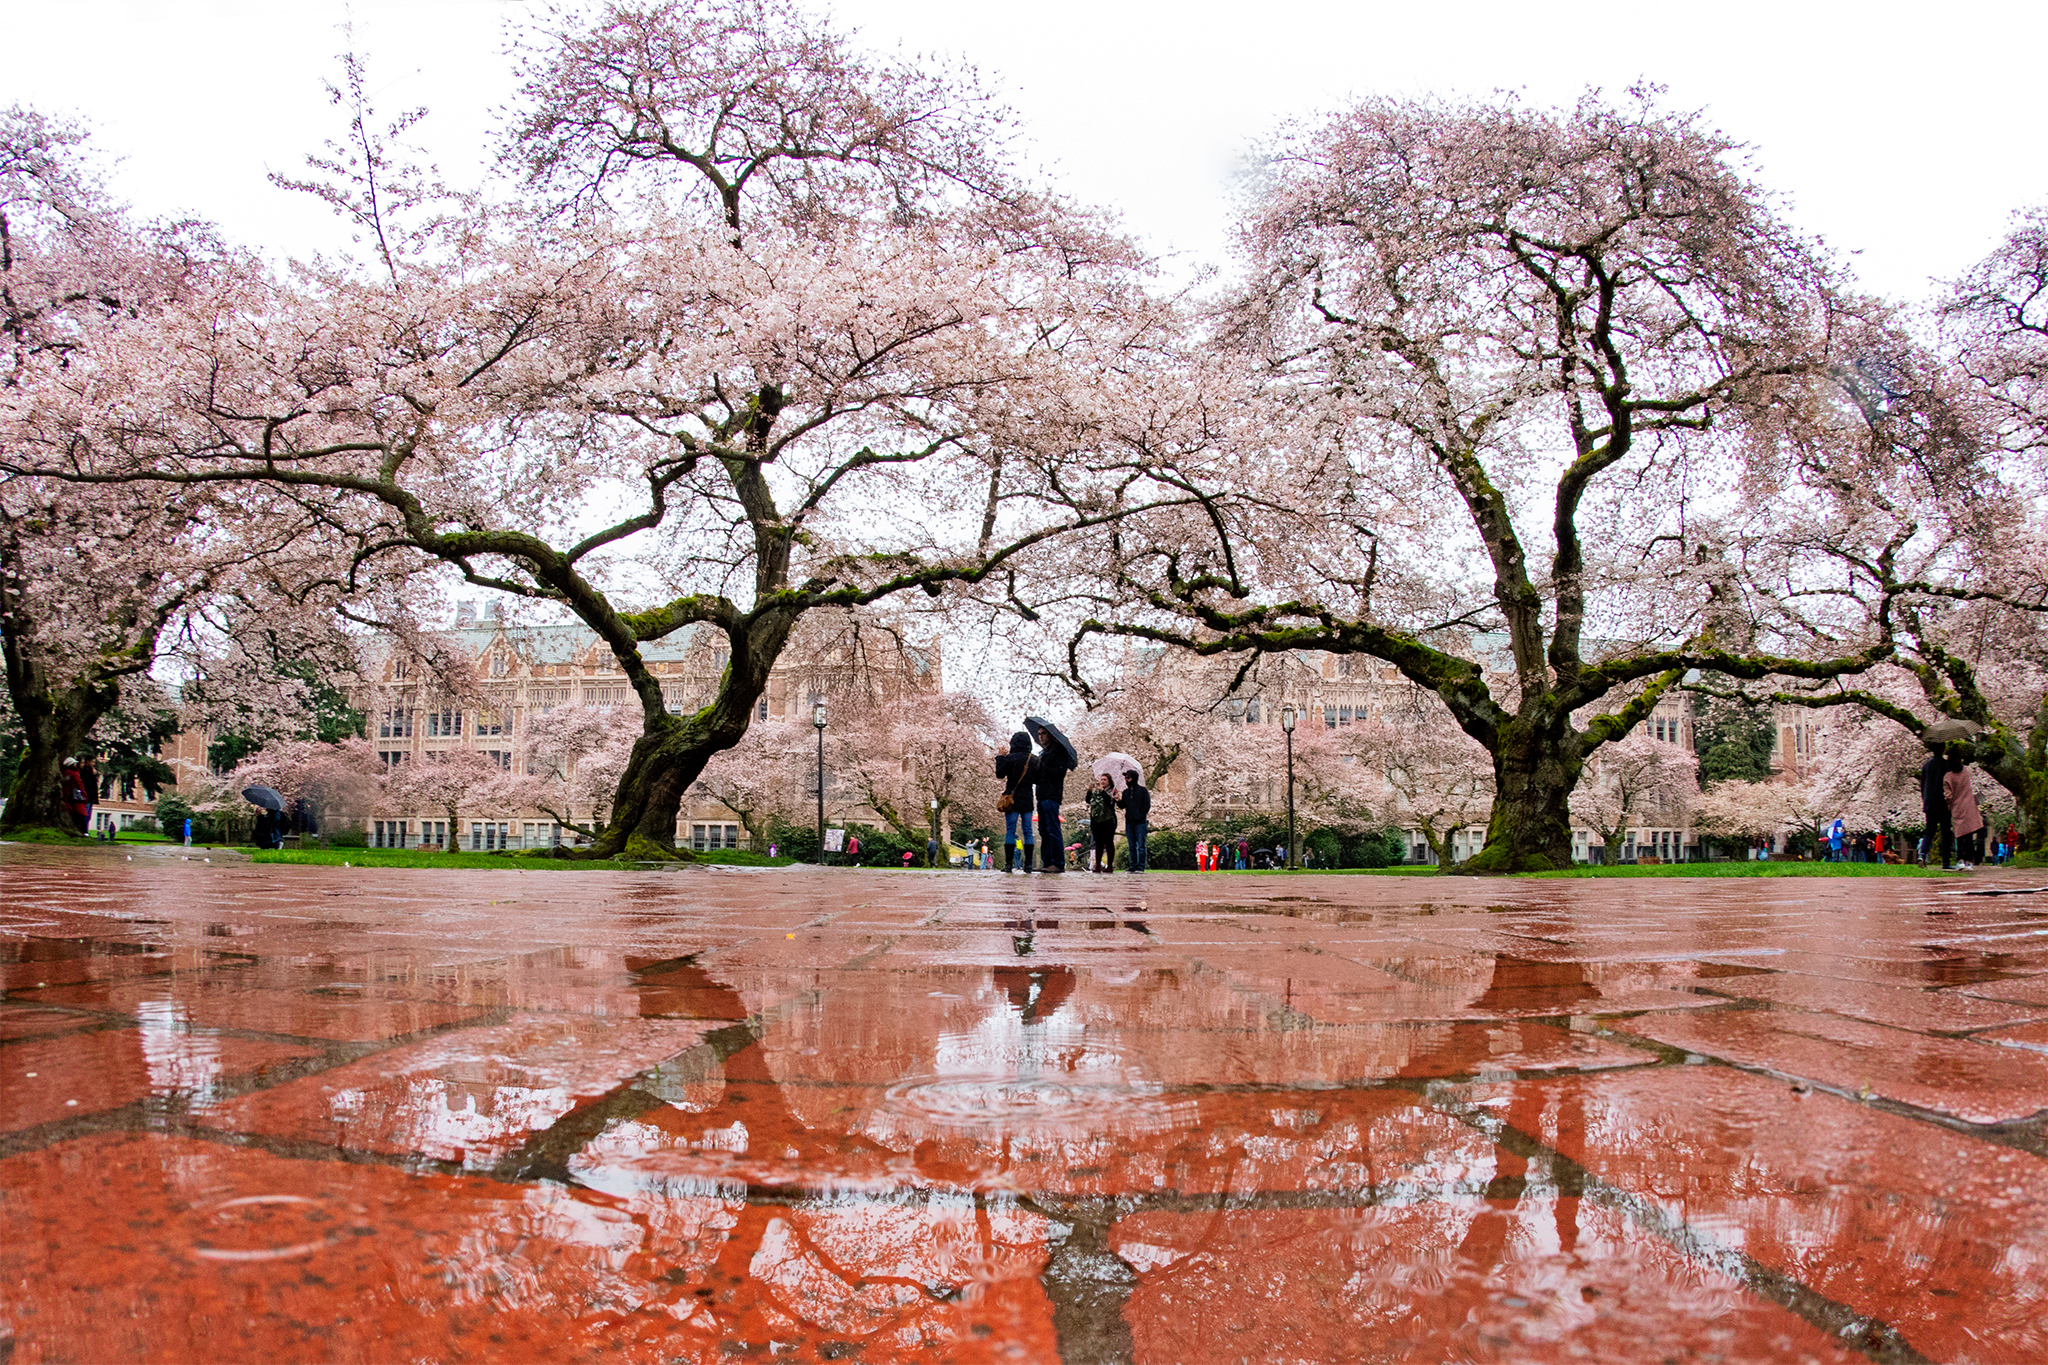 The UW cherry blossom